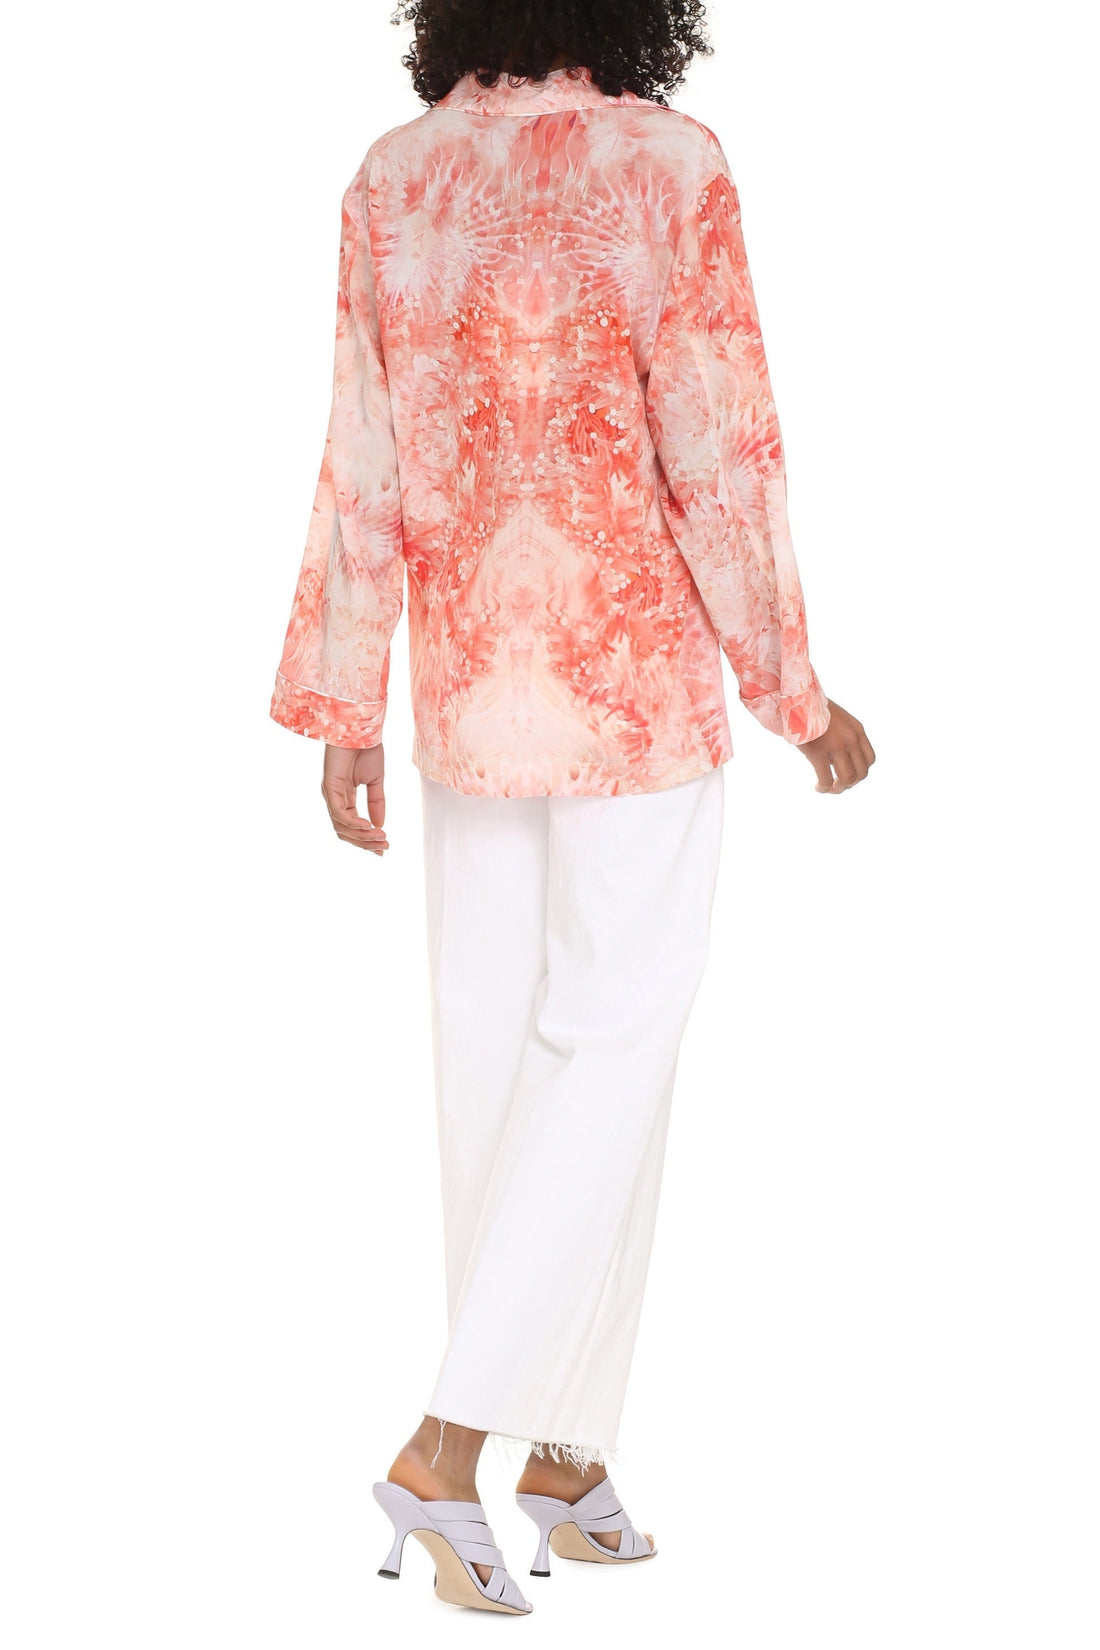 Alexander McQueen-OUTLET-SALE-Printed silk pajama blouse-ARCHIVIST